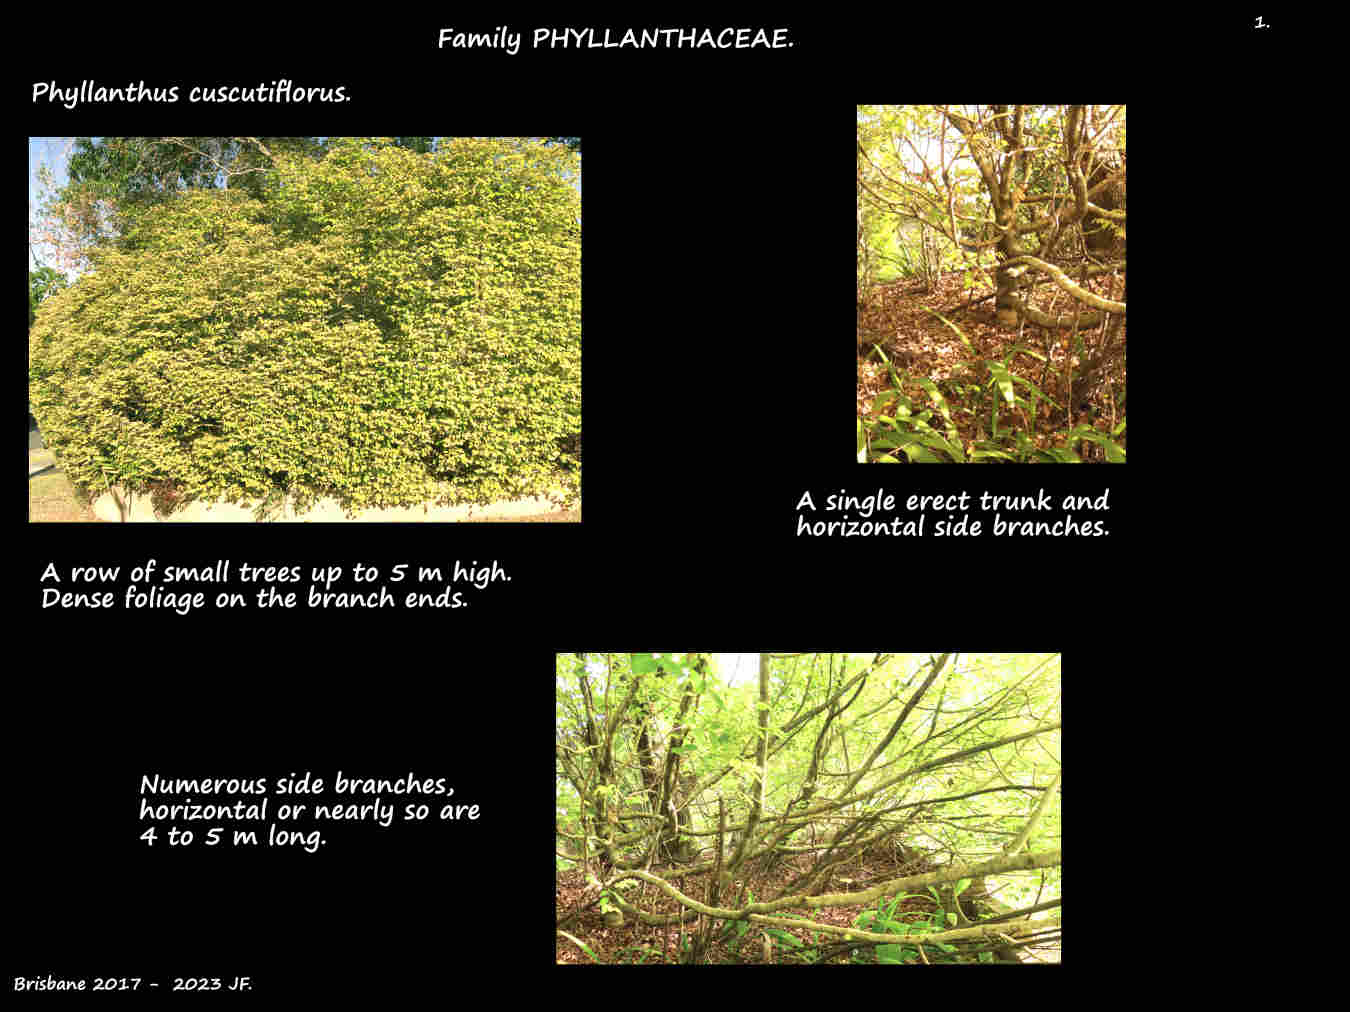 1 A row of Phyllanthus cuscutiflorus trees